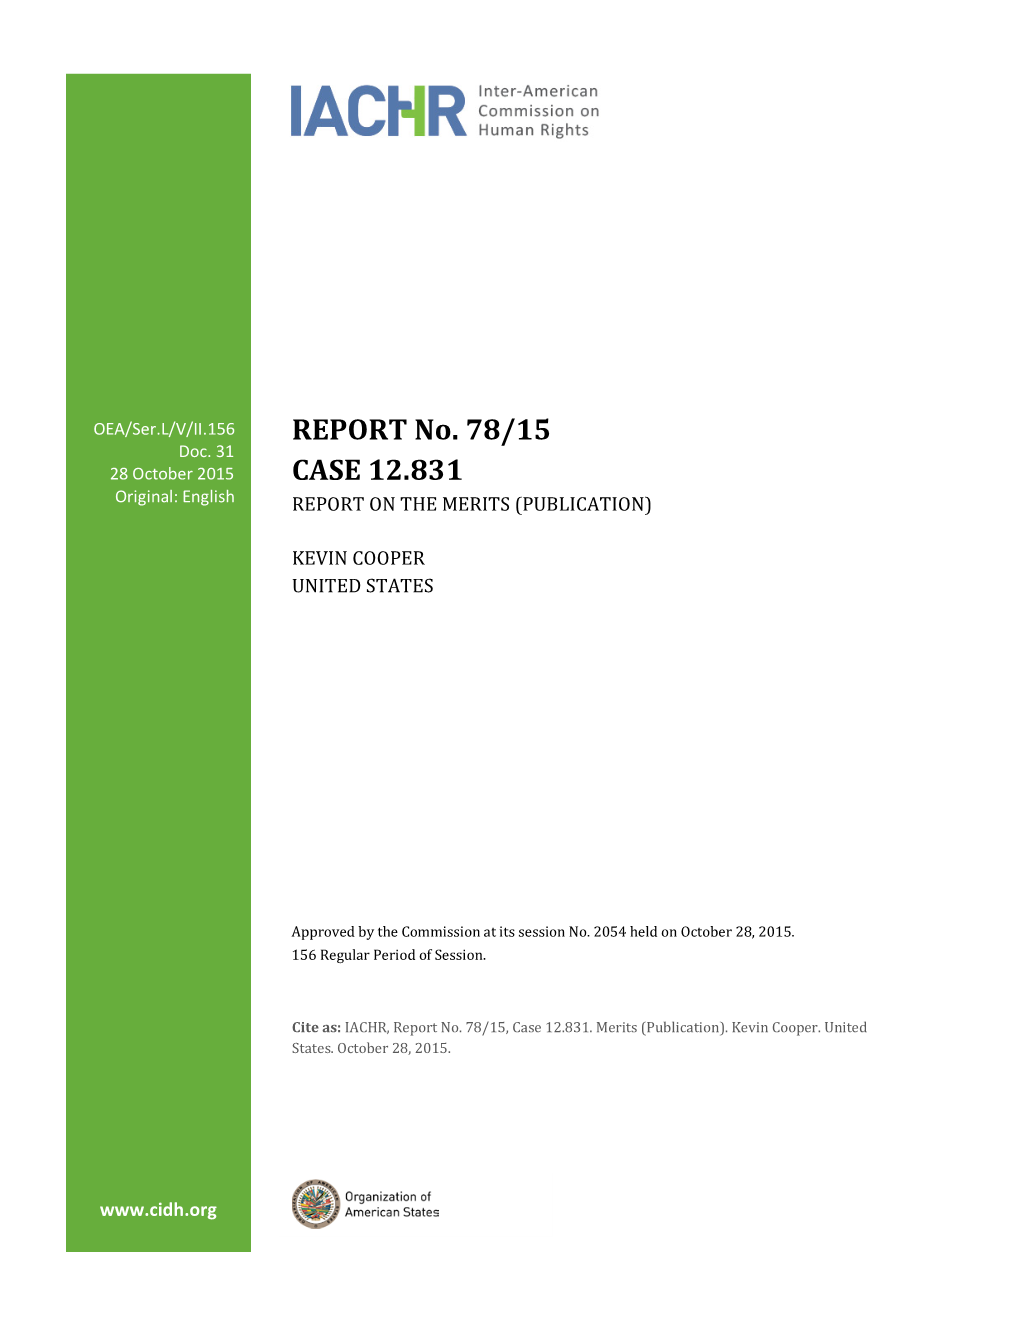 Case 12.831, Report No. 78/15, United States